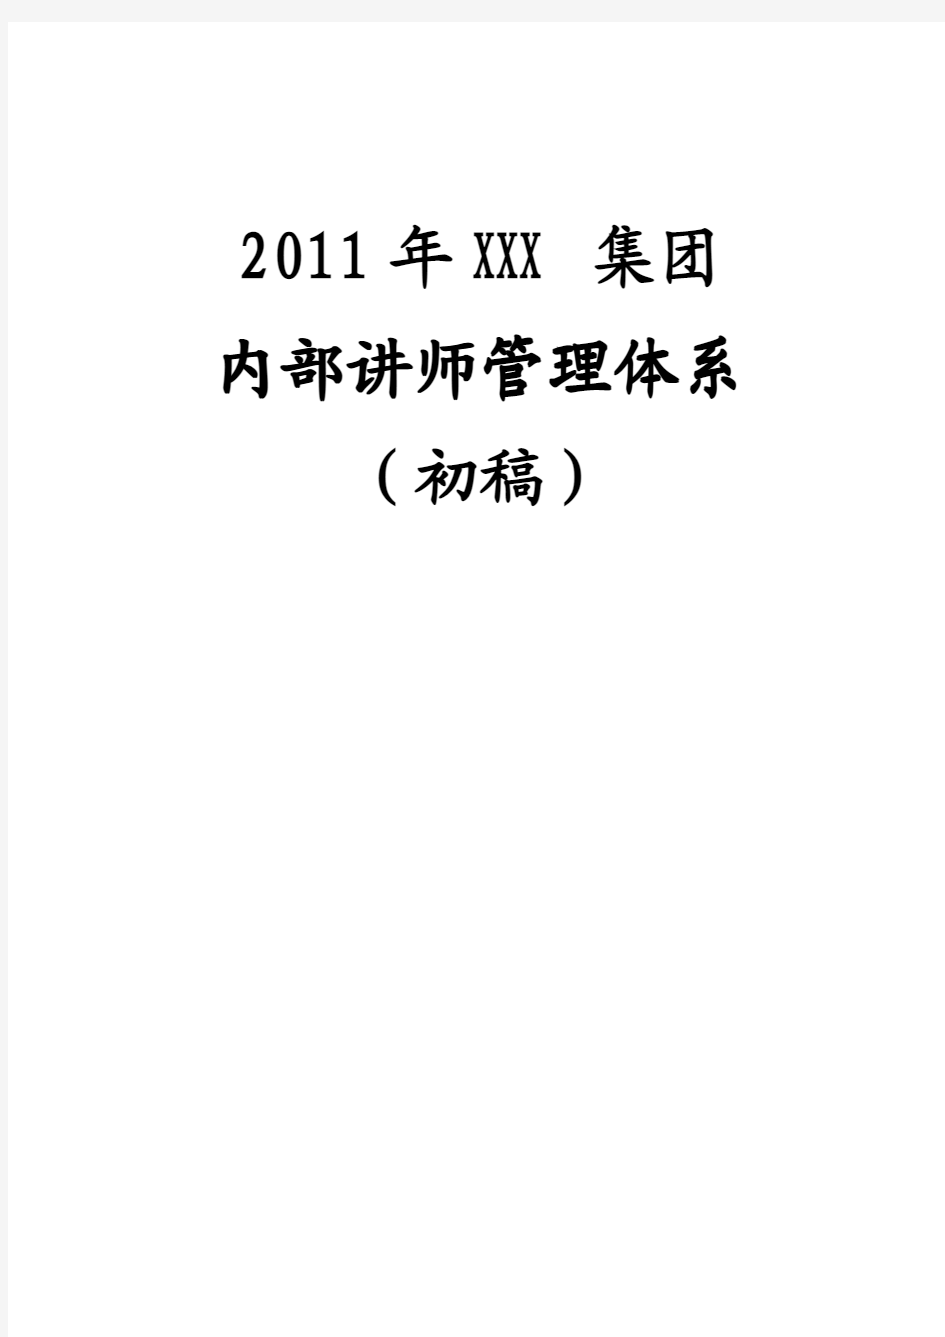 2011XXX集团内部讲师管理体系1